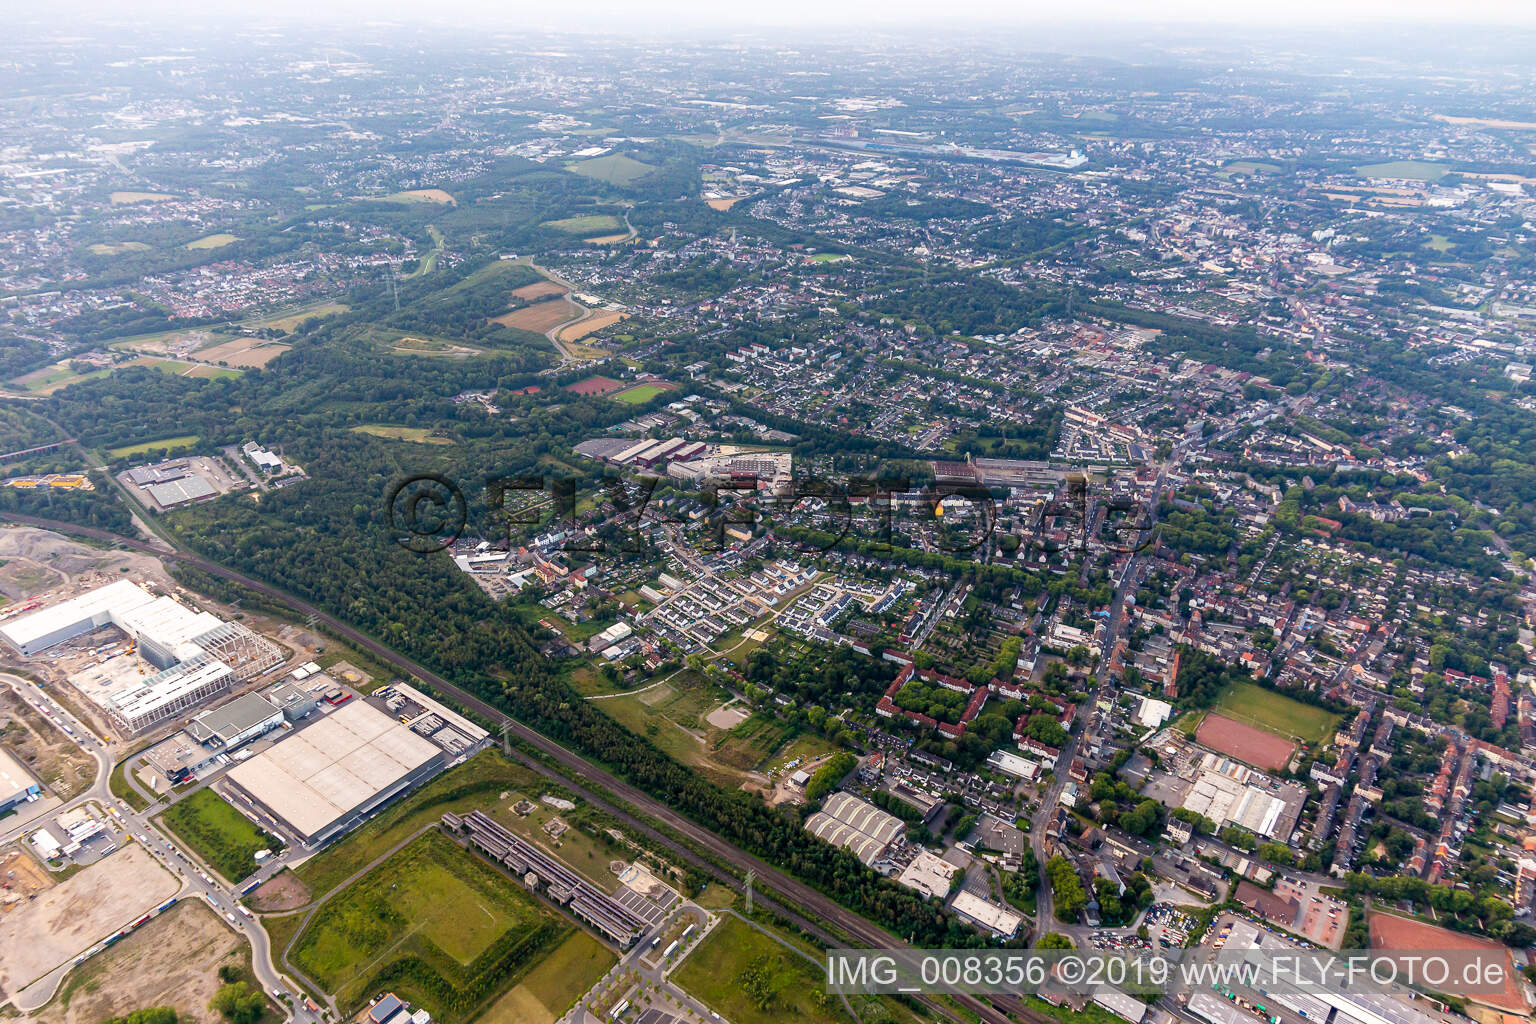 Aerial view of Ückendorf in the state North Rhine-Westphalia, Germany